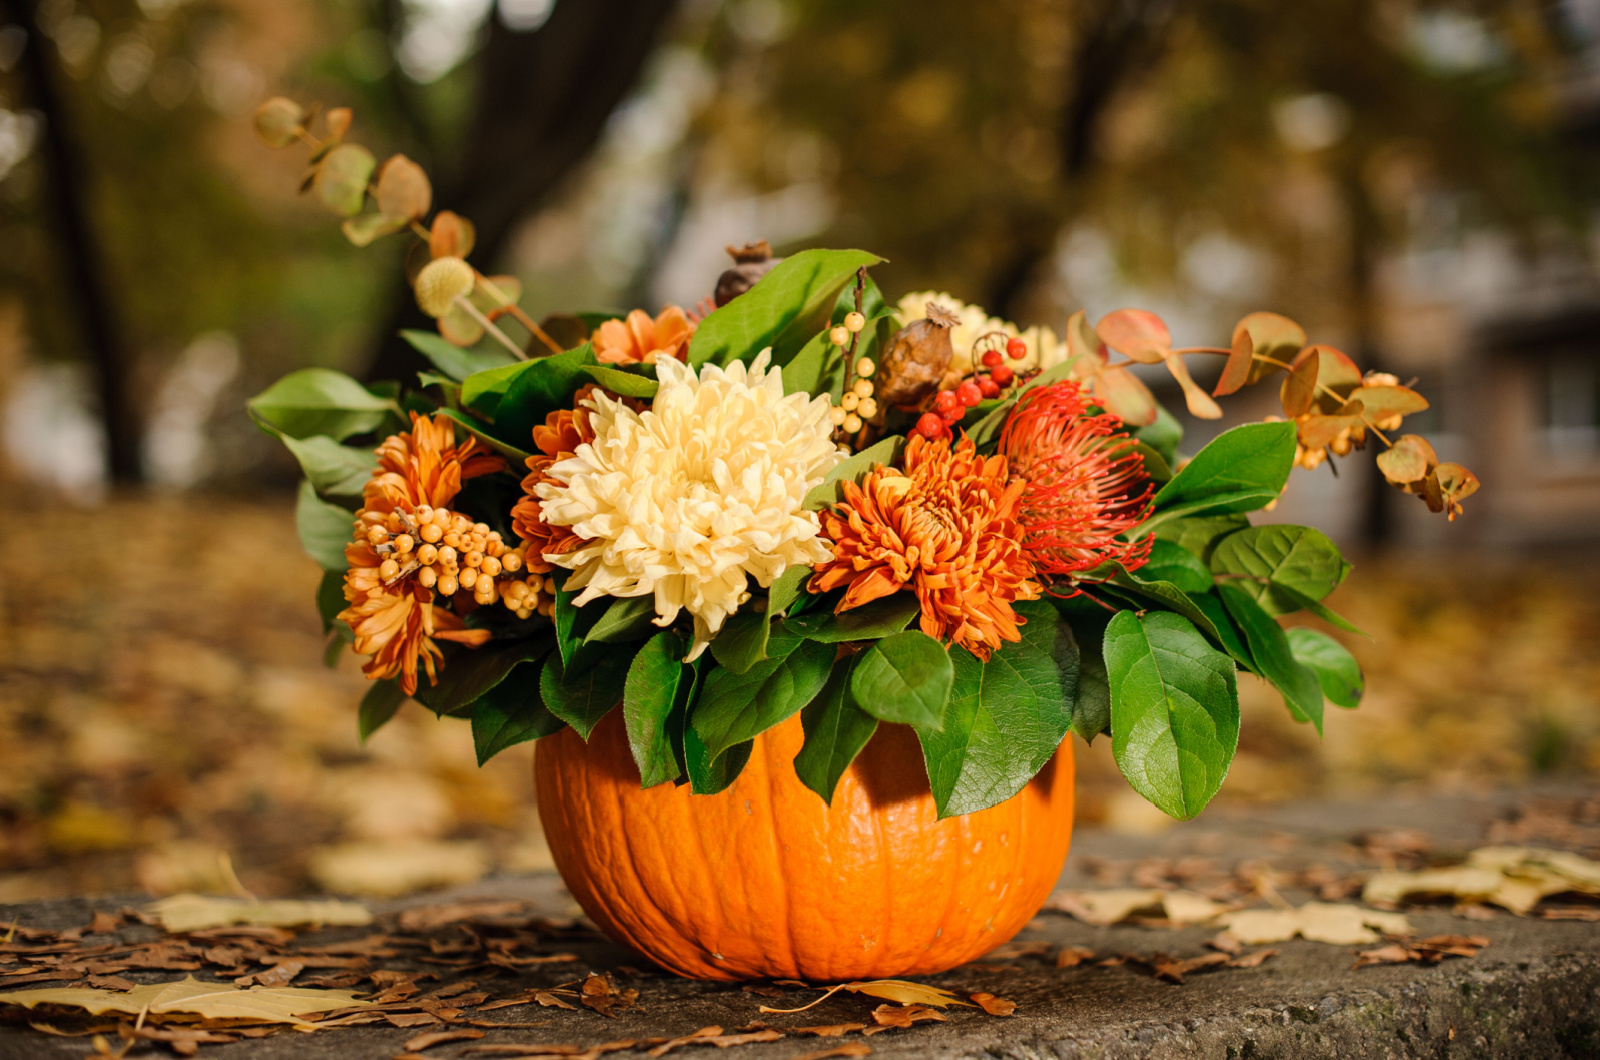 Orange pumpkin with a lovely autumn flowers